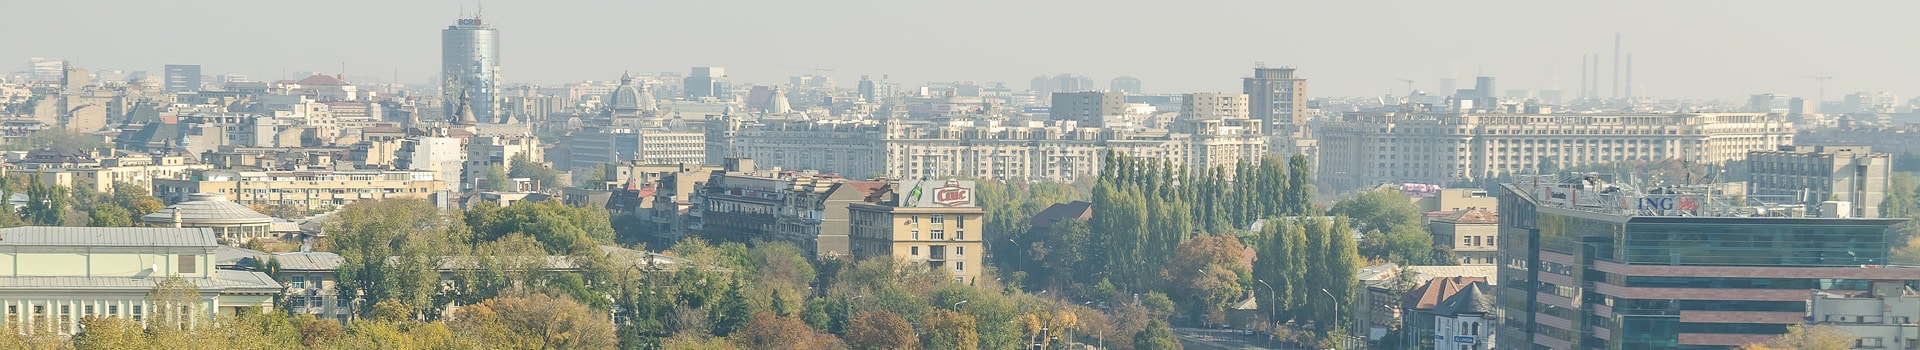 Pisa - Bucharest